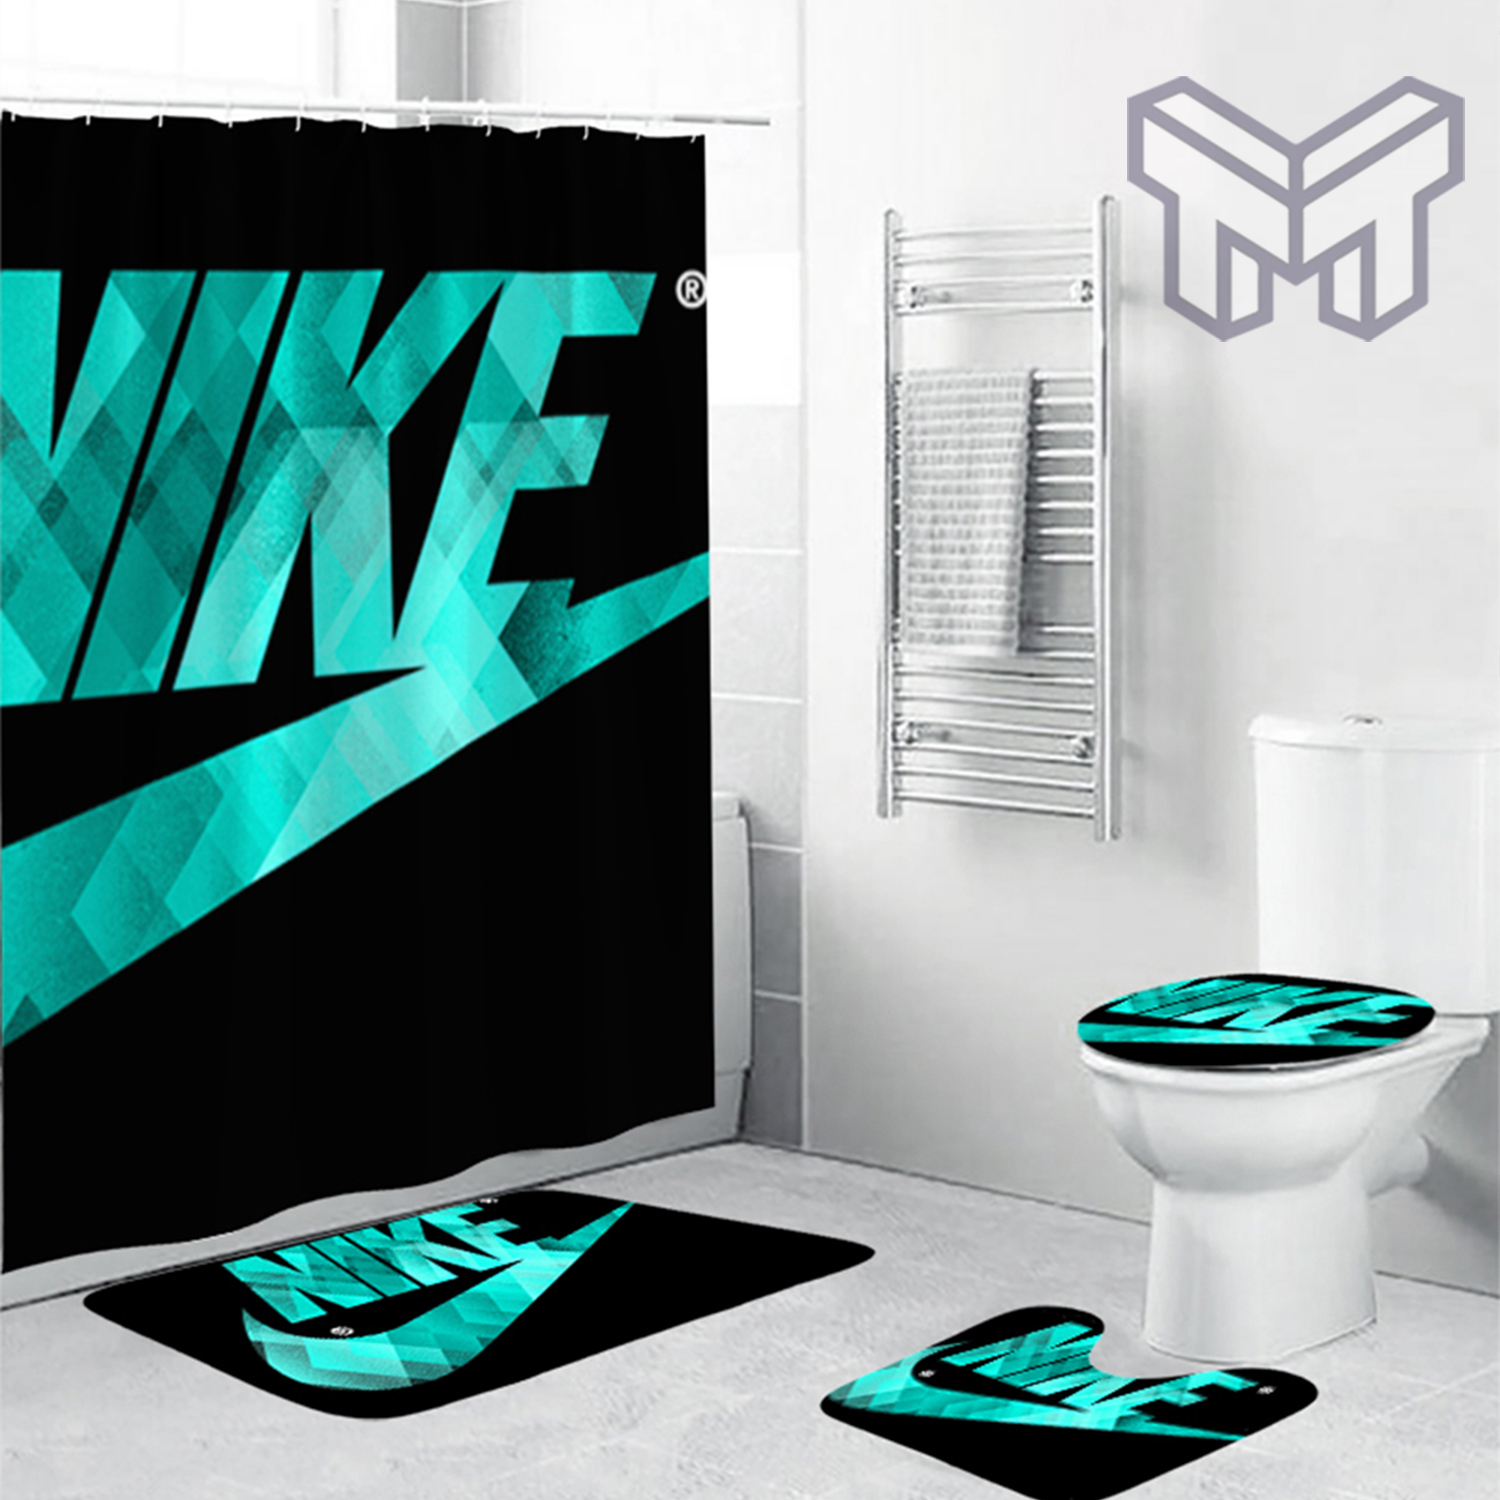 Bakken Thespian zelfstandig naamwoord Nike Turquoise Fashion Luxury Brand Premium Bathroom Set Home Decor Shower  Curtain And Rug Toilet Seat Lid Covers Bathroom Set - Muranotex Store